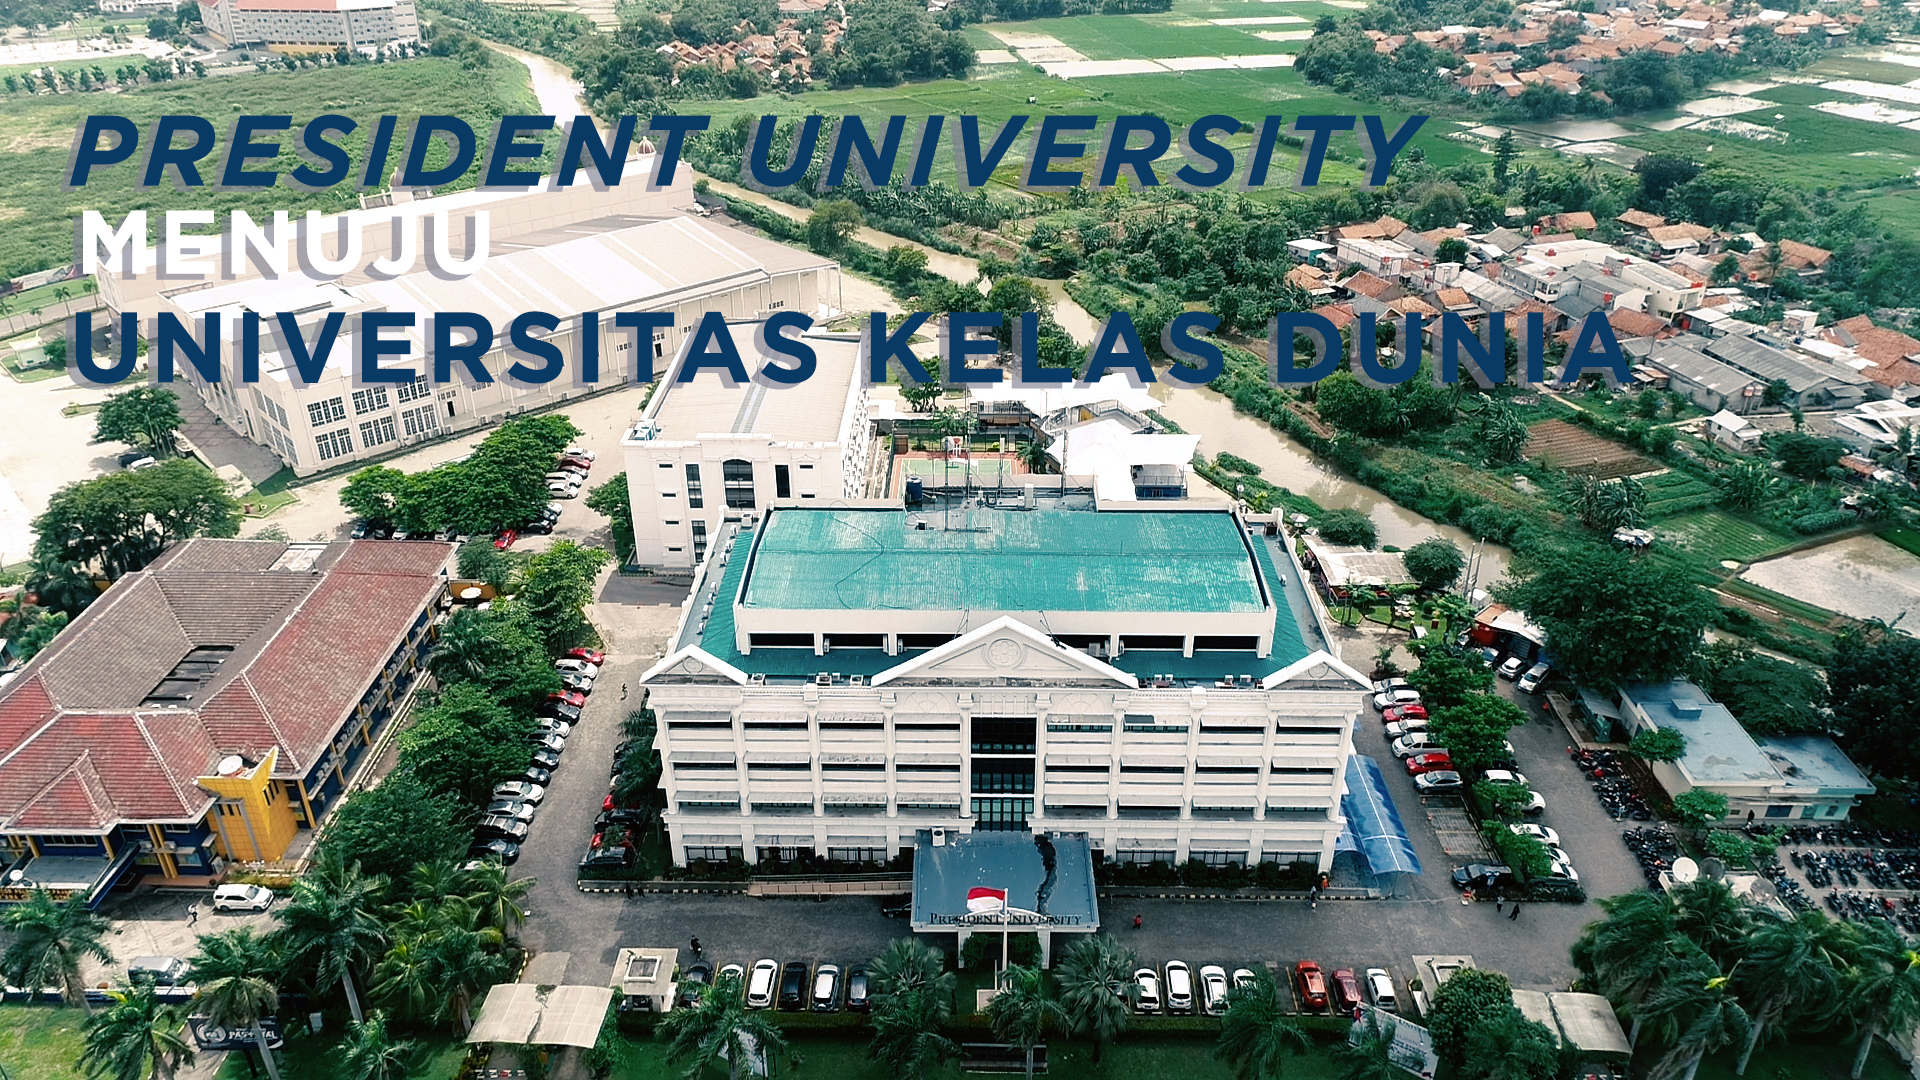 Universitas presiden President University